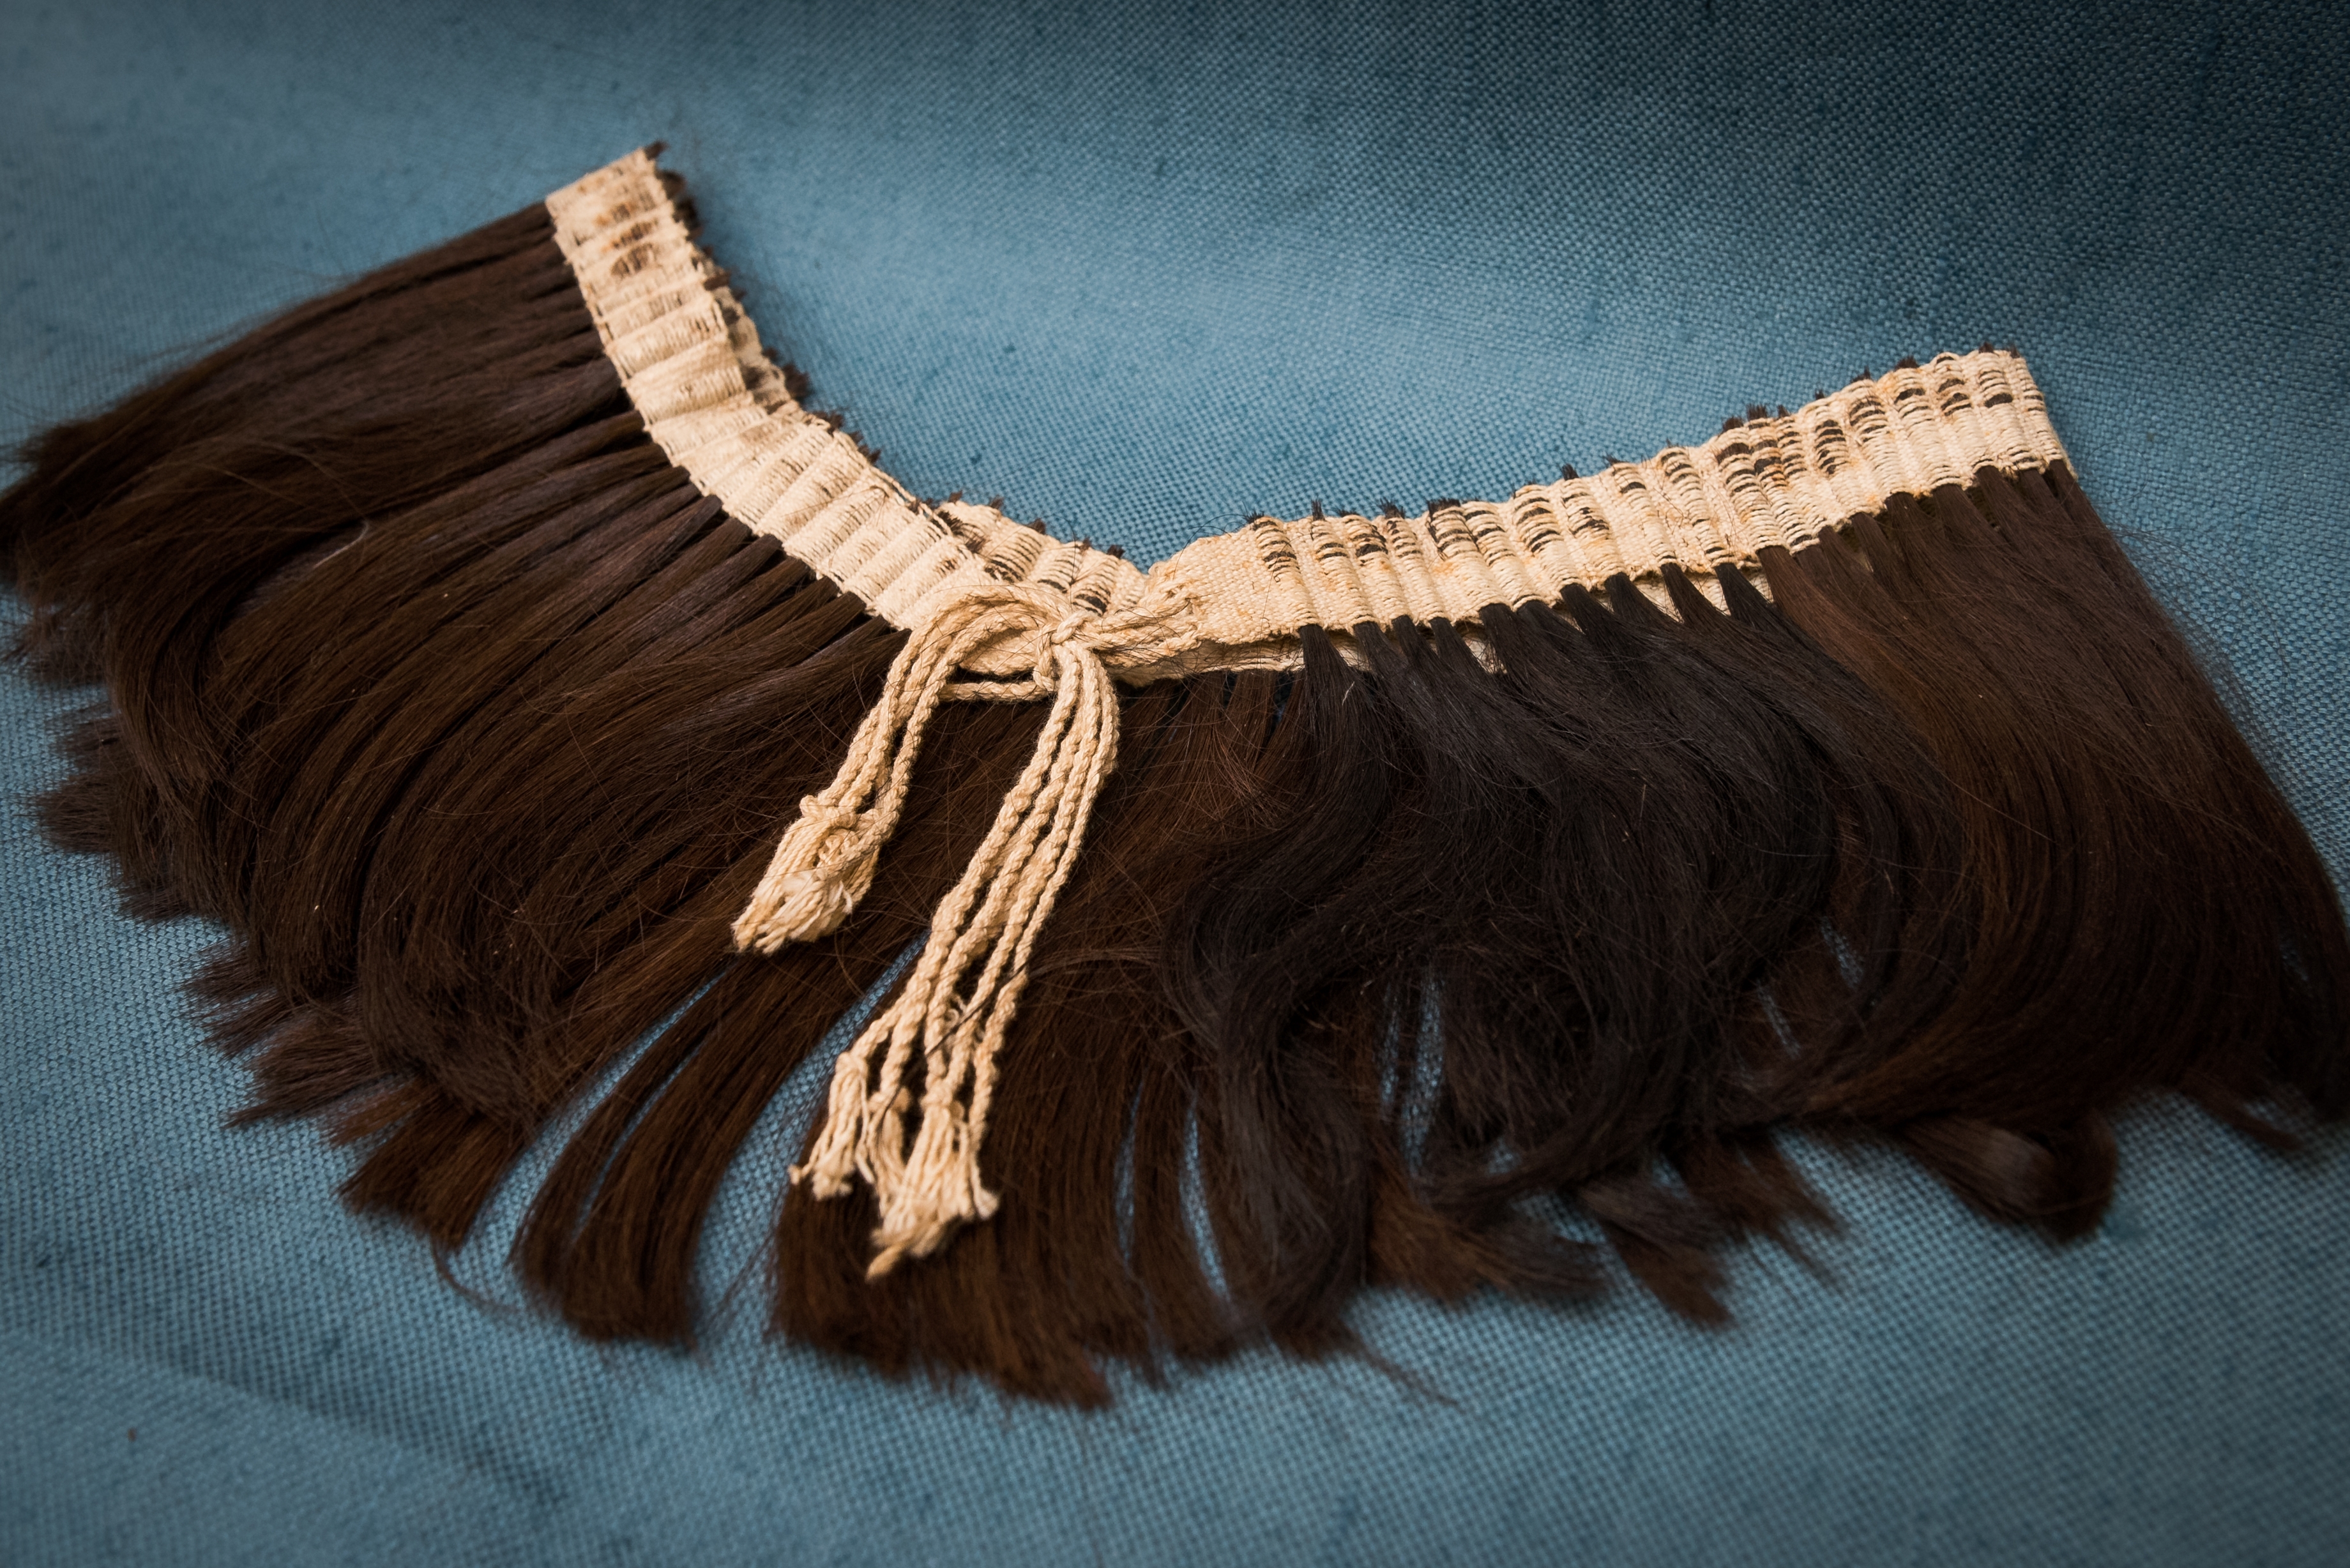 UA Museums’ Collections Spotlight: Jivaro Human Hair Girdle